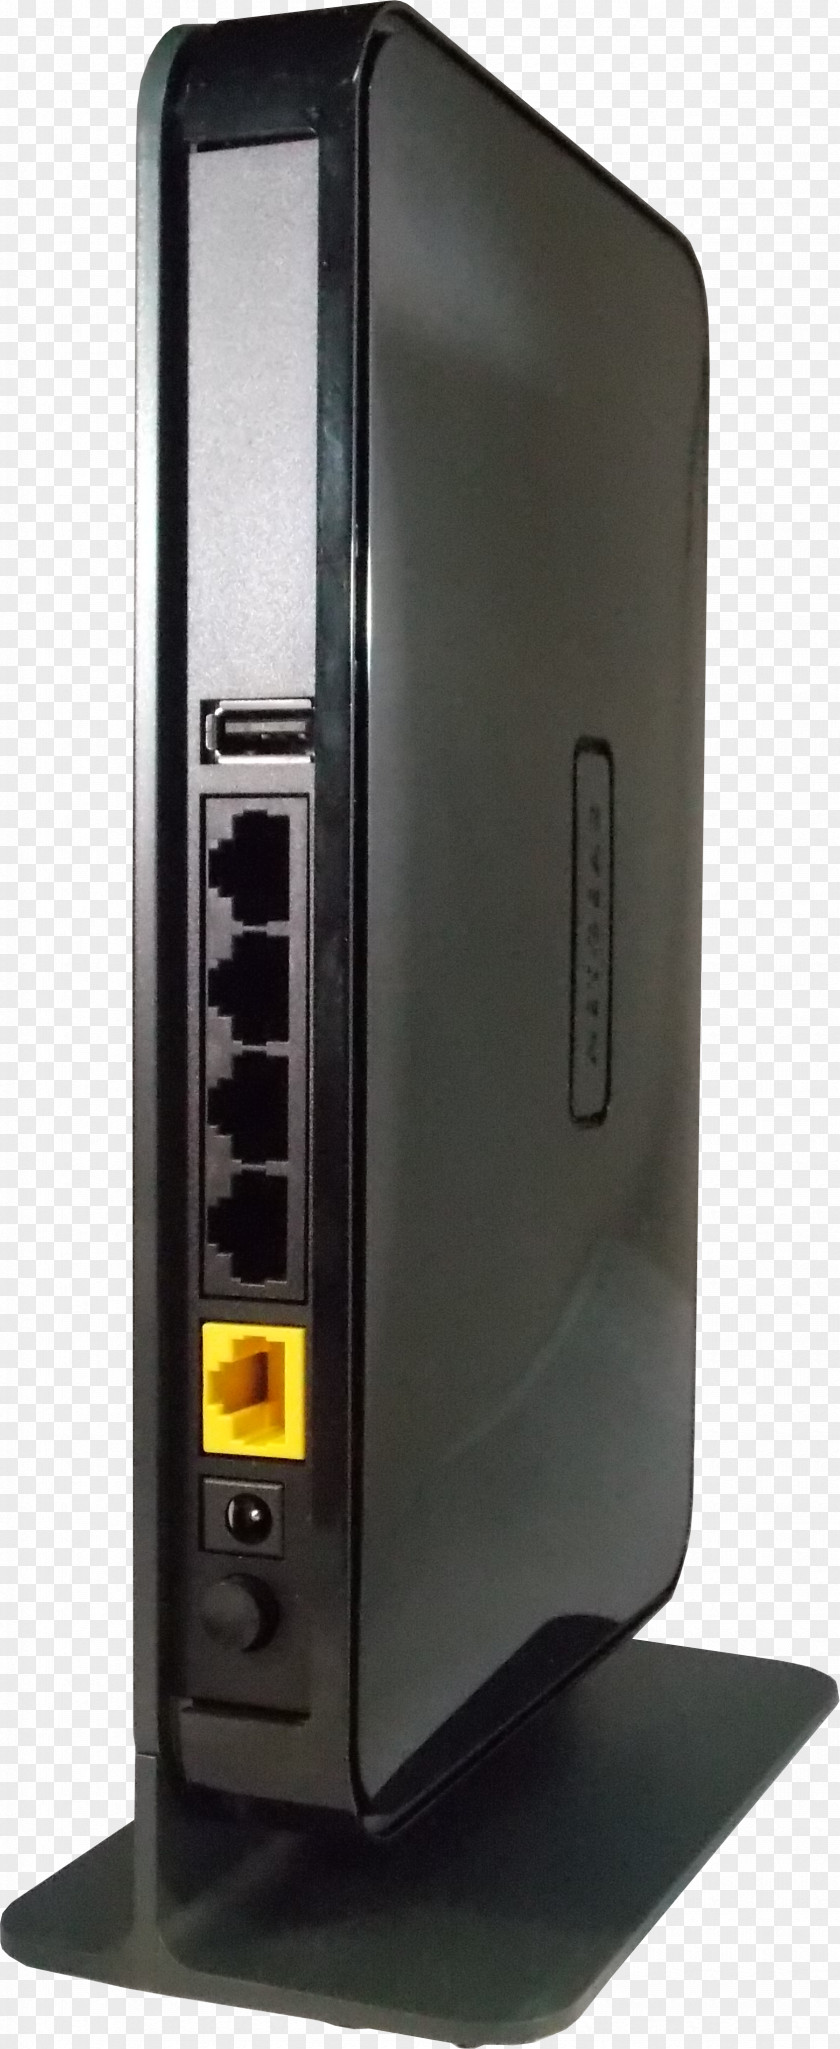 Computer Cases & Housings Netgear Wireless Router Network PNG